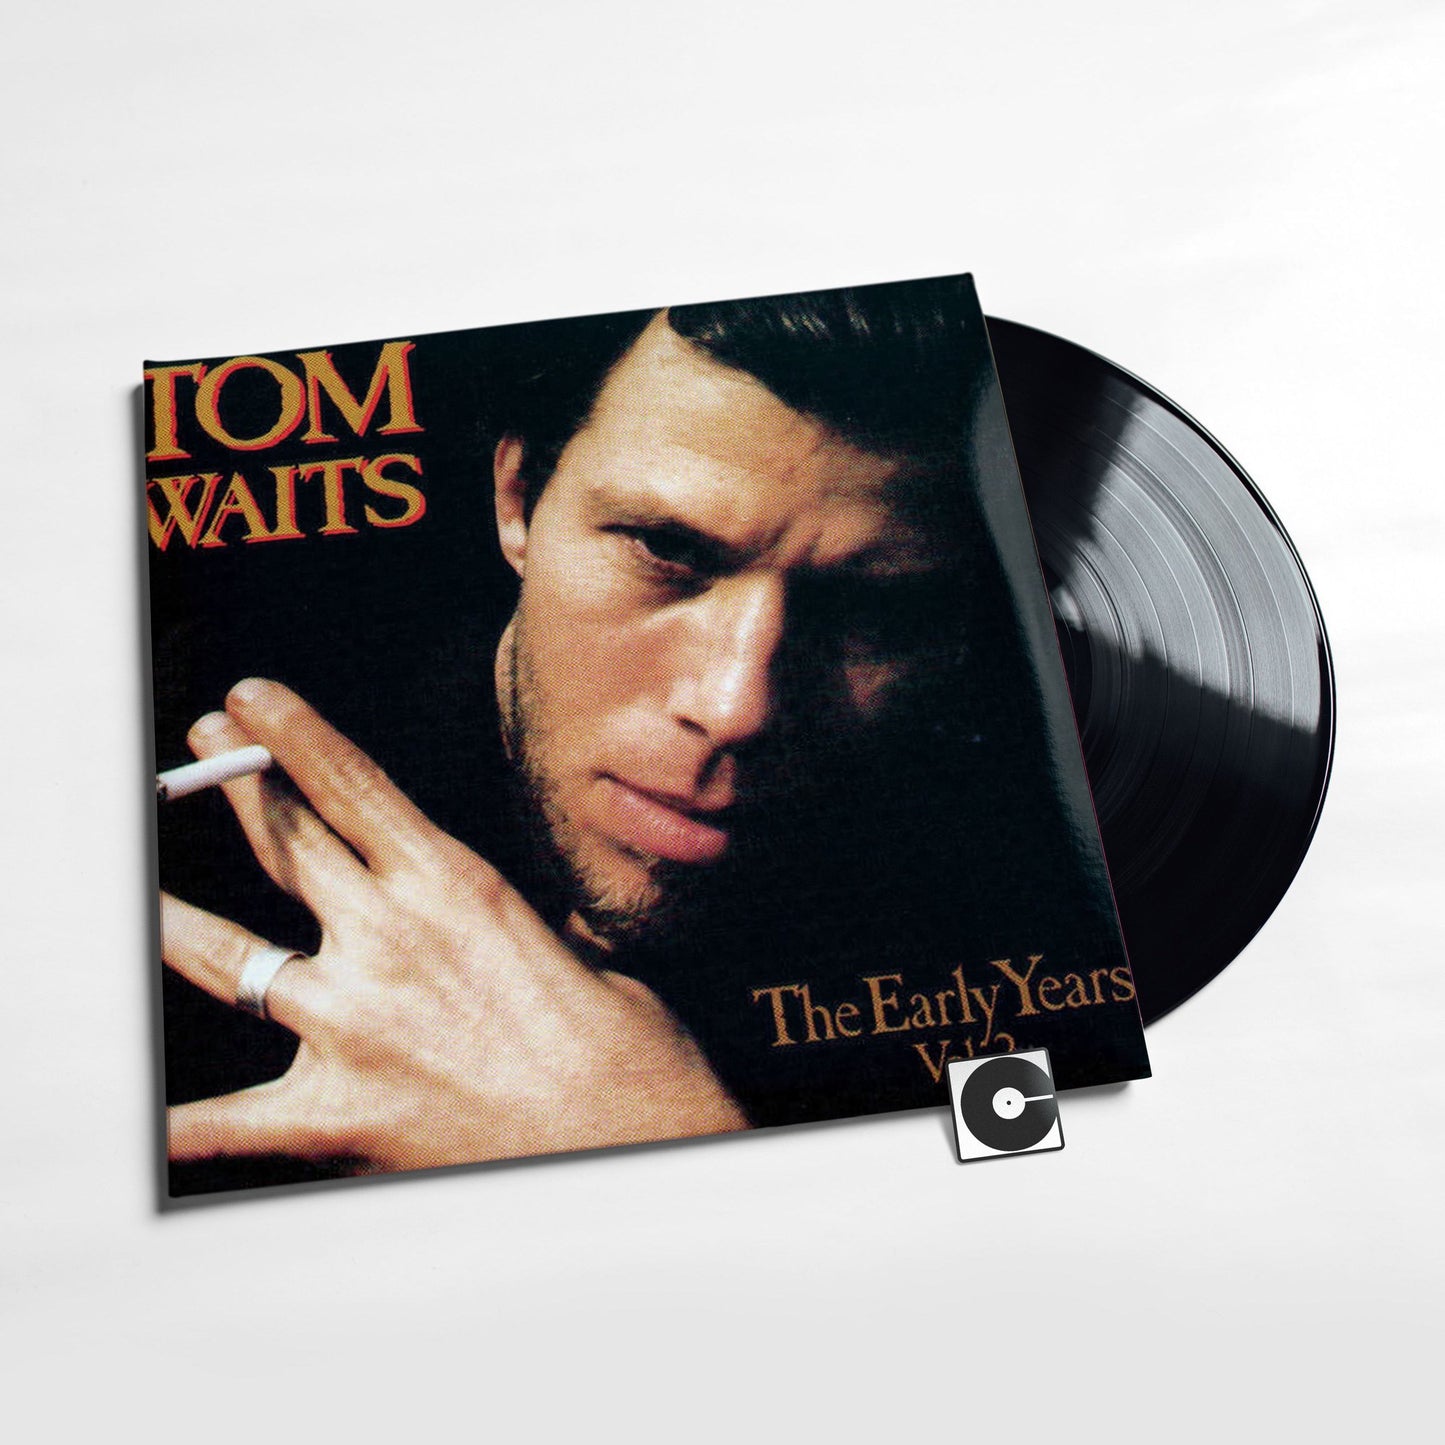 Tom Waits - "The Early Years Volume 2"